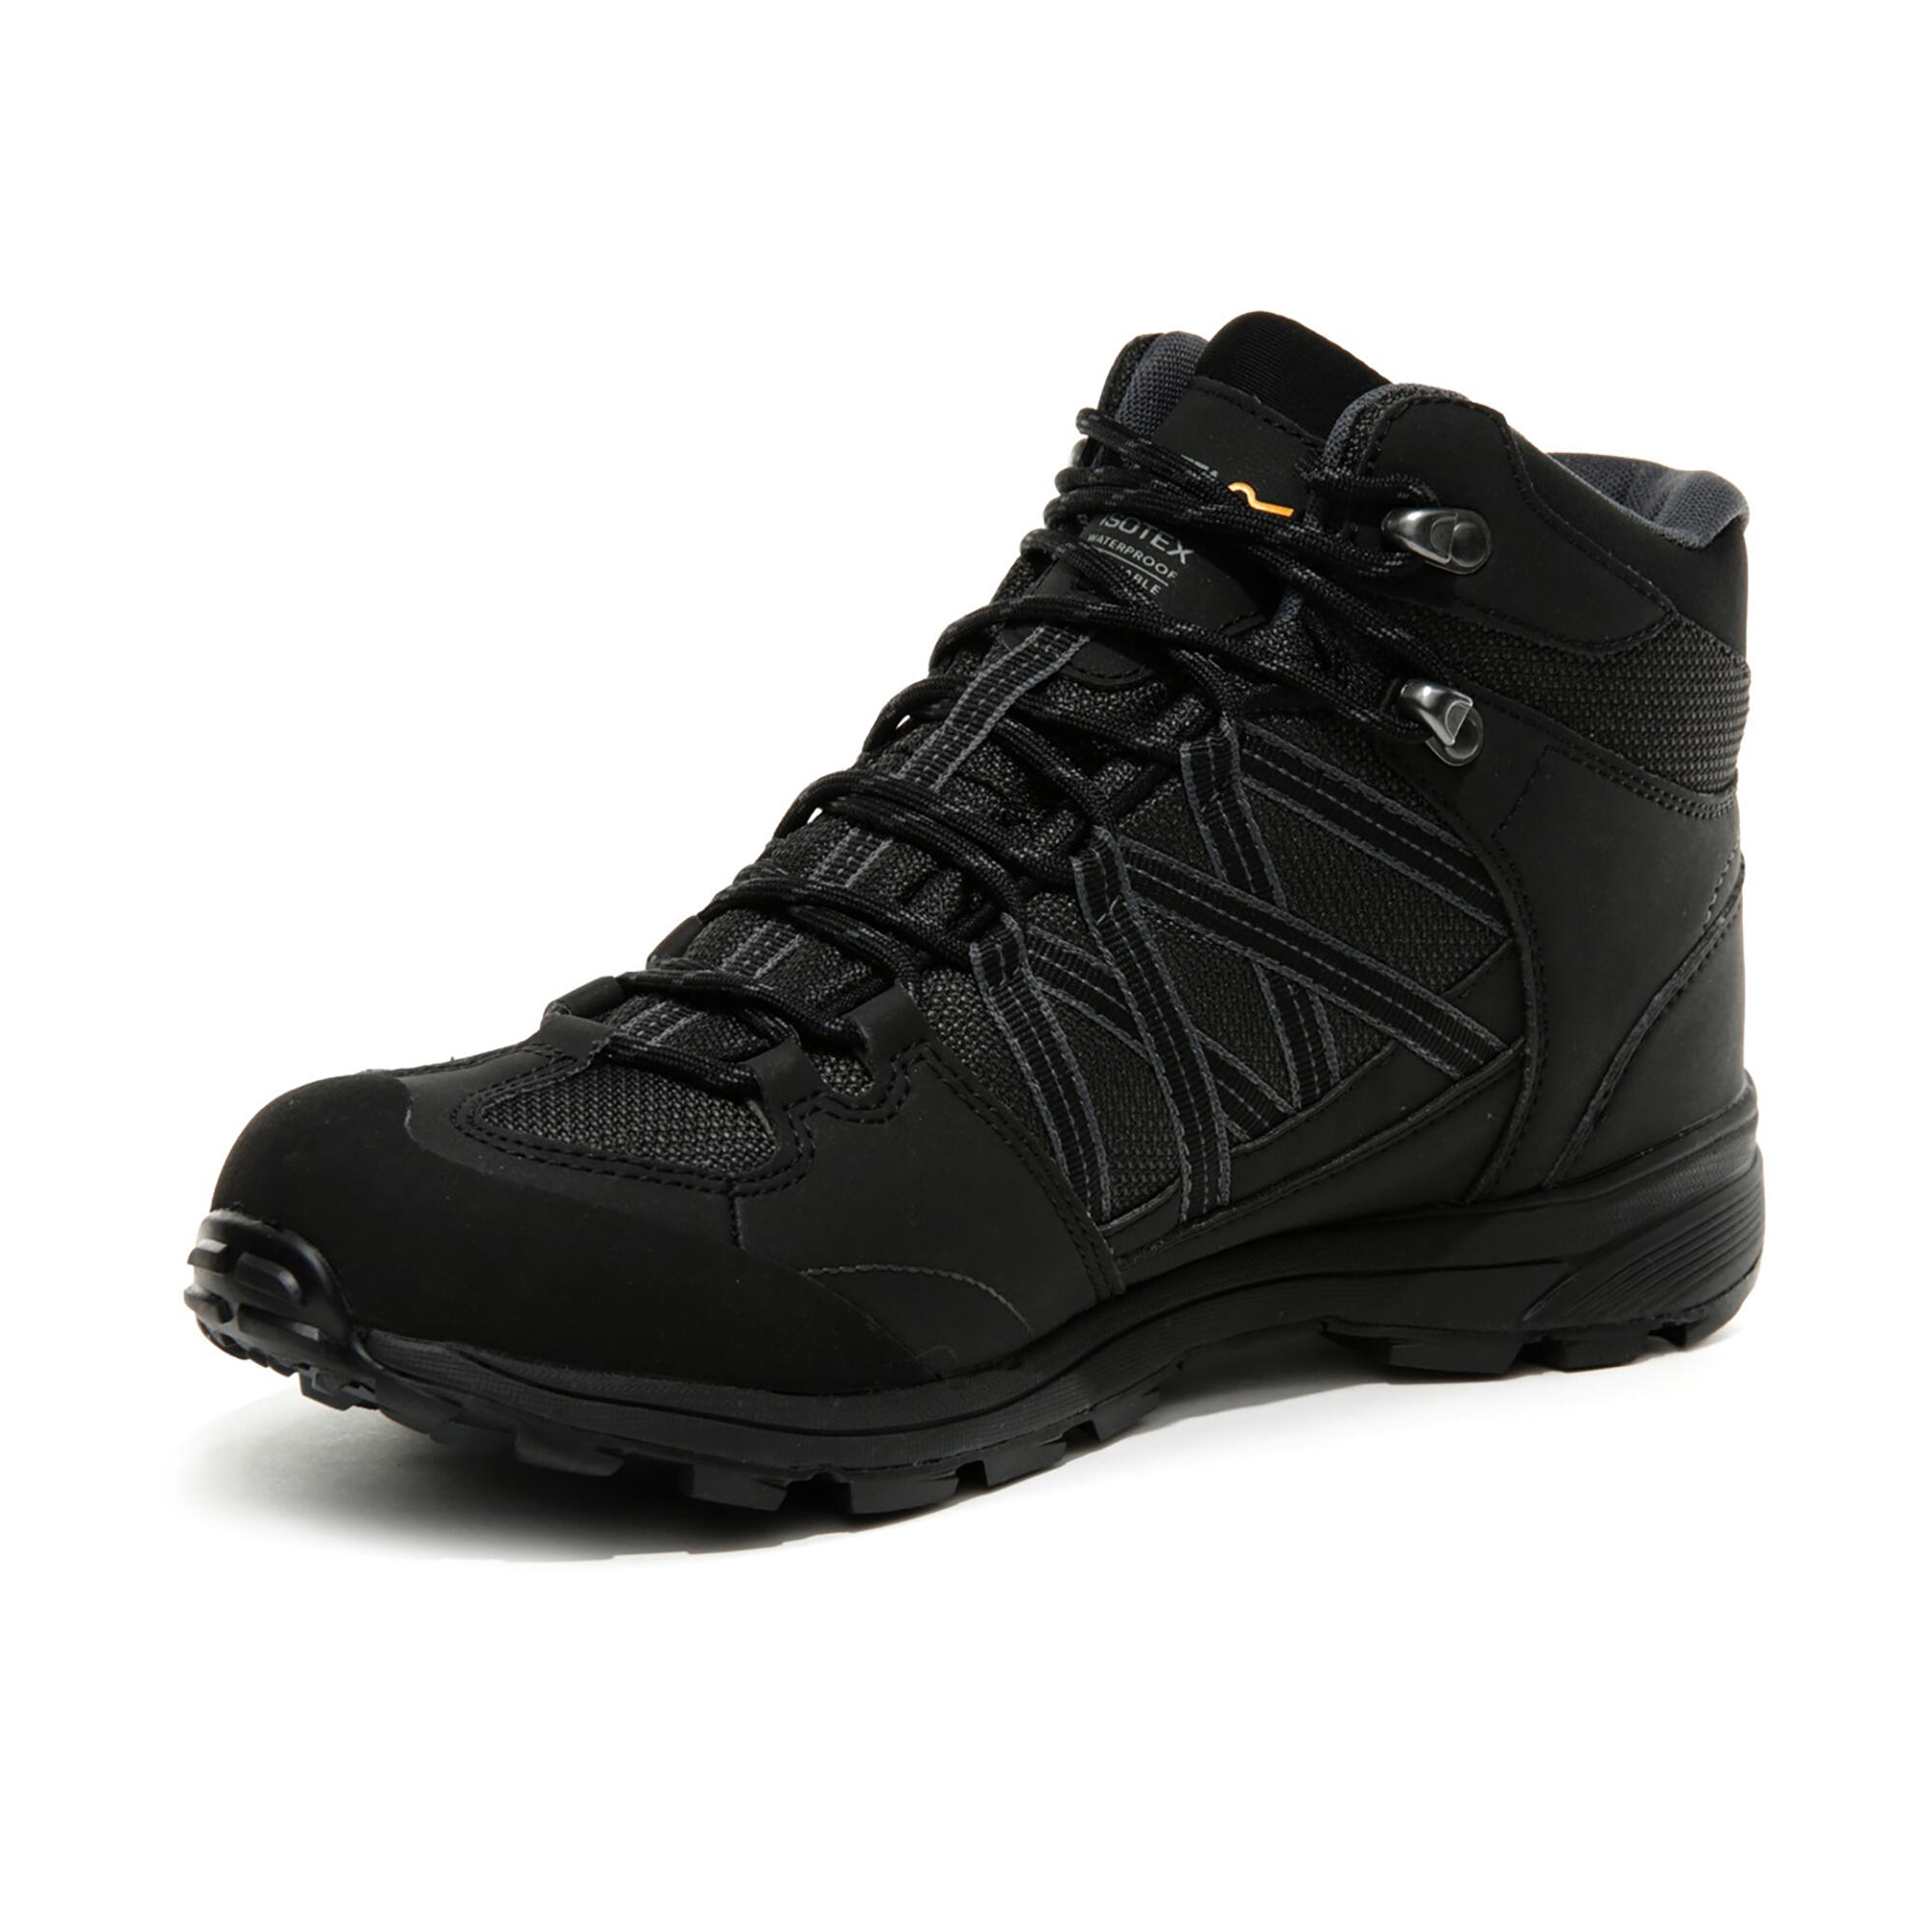 Samaris II Men's Hiking Boots - Black/Grey 3/5